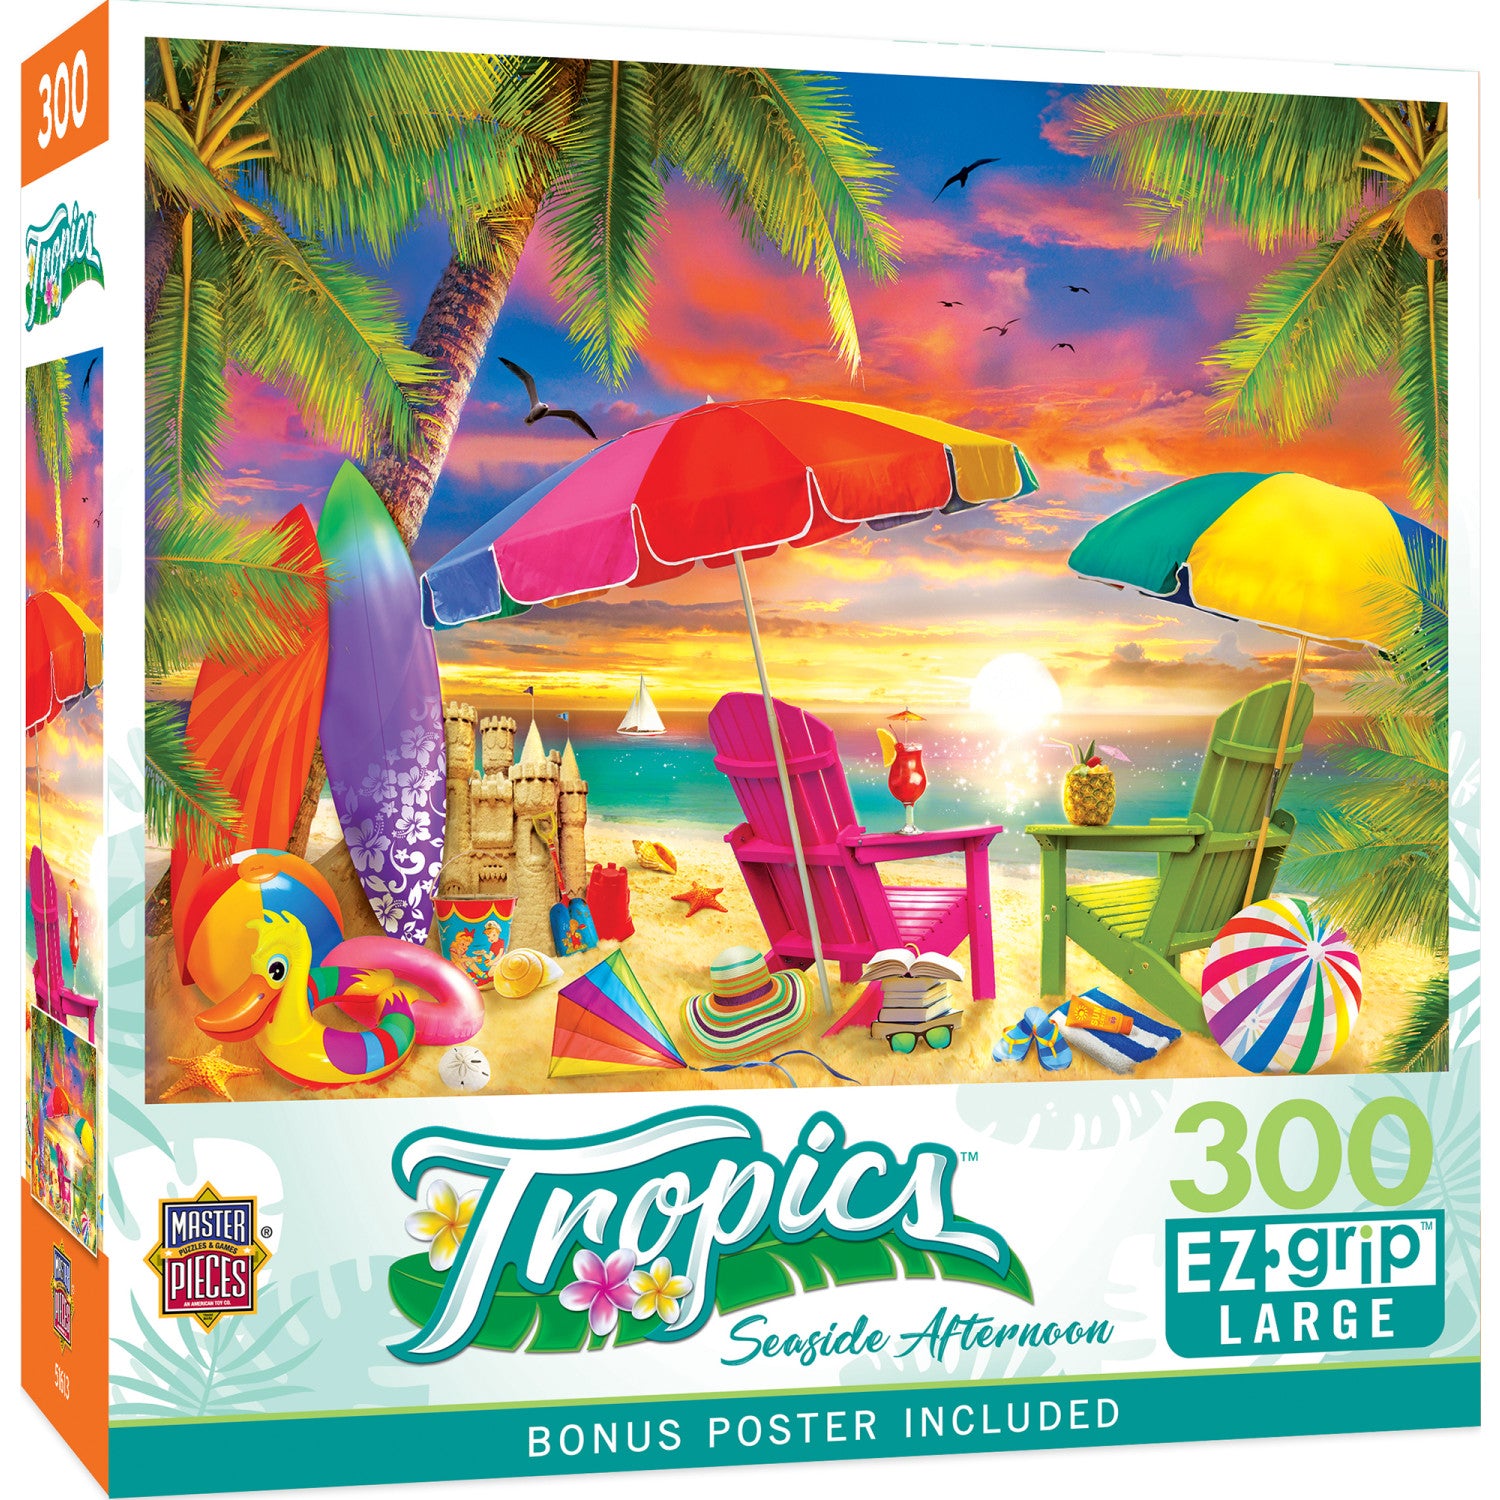 Tropics - Seaside Afternoon 300 Piece Puzzle